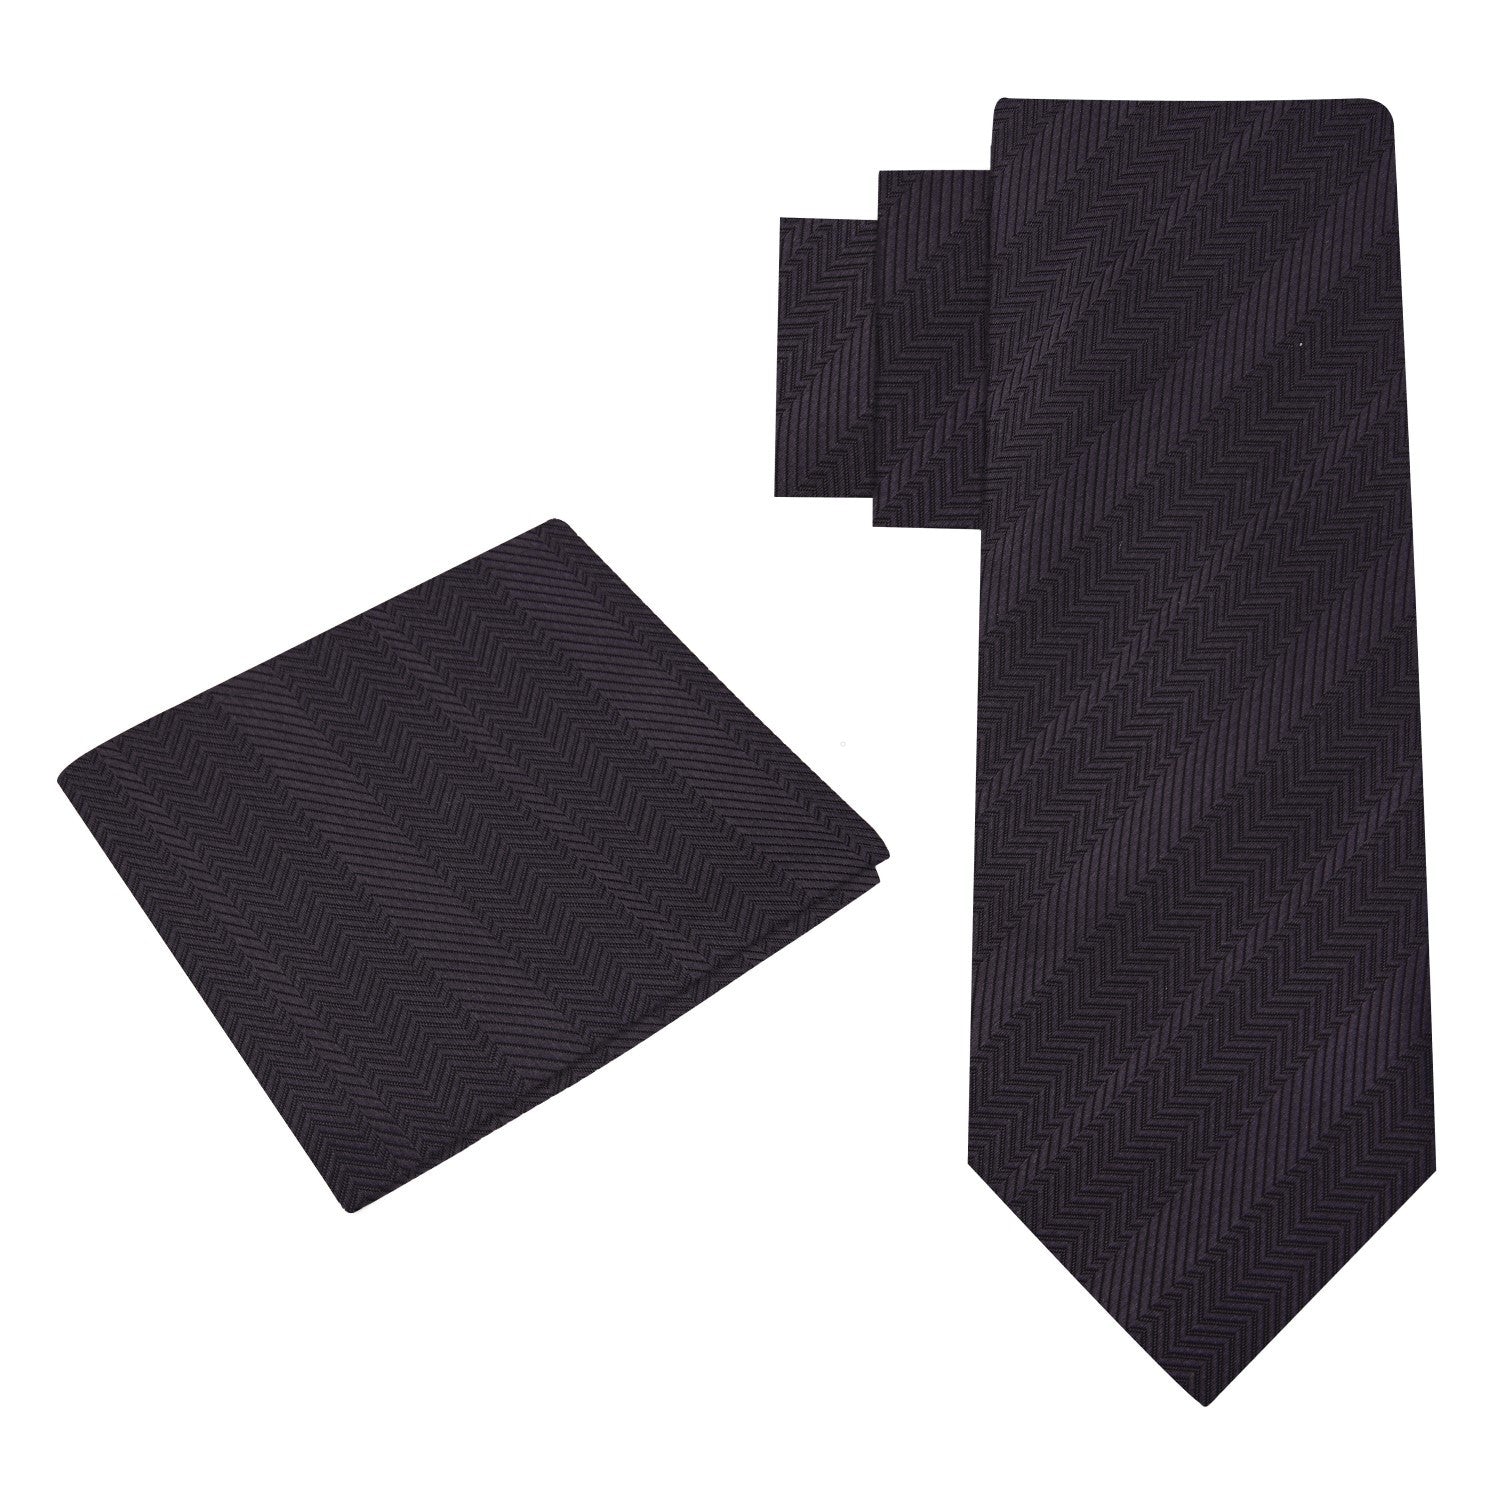 Alt View: A Solid Graphite Shadow Pattern Silk Necktie, Matching Pocket Square